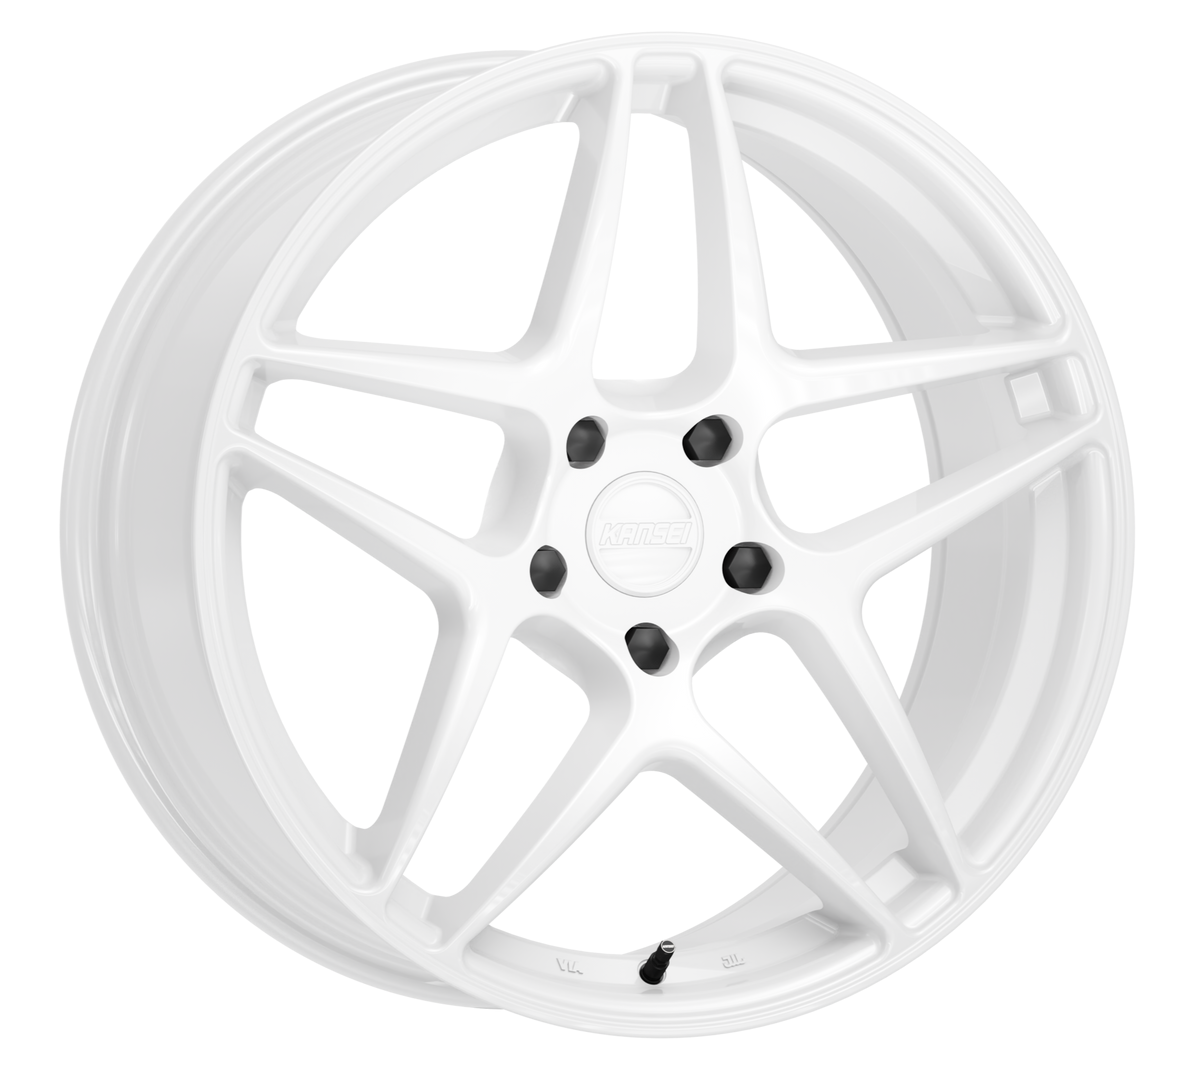 K15W ASTRO Wheel, Size: 19" x 10.50", Bolt Pattern: 5 x 114.300 mm, Backspace: 6.62" [Finish: Gloss White]